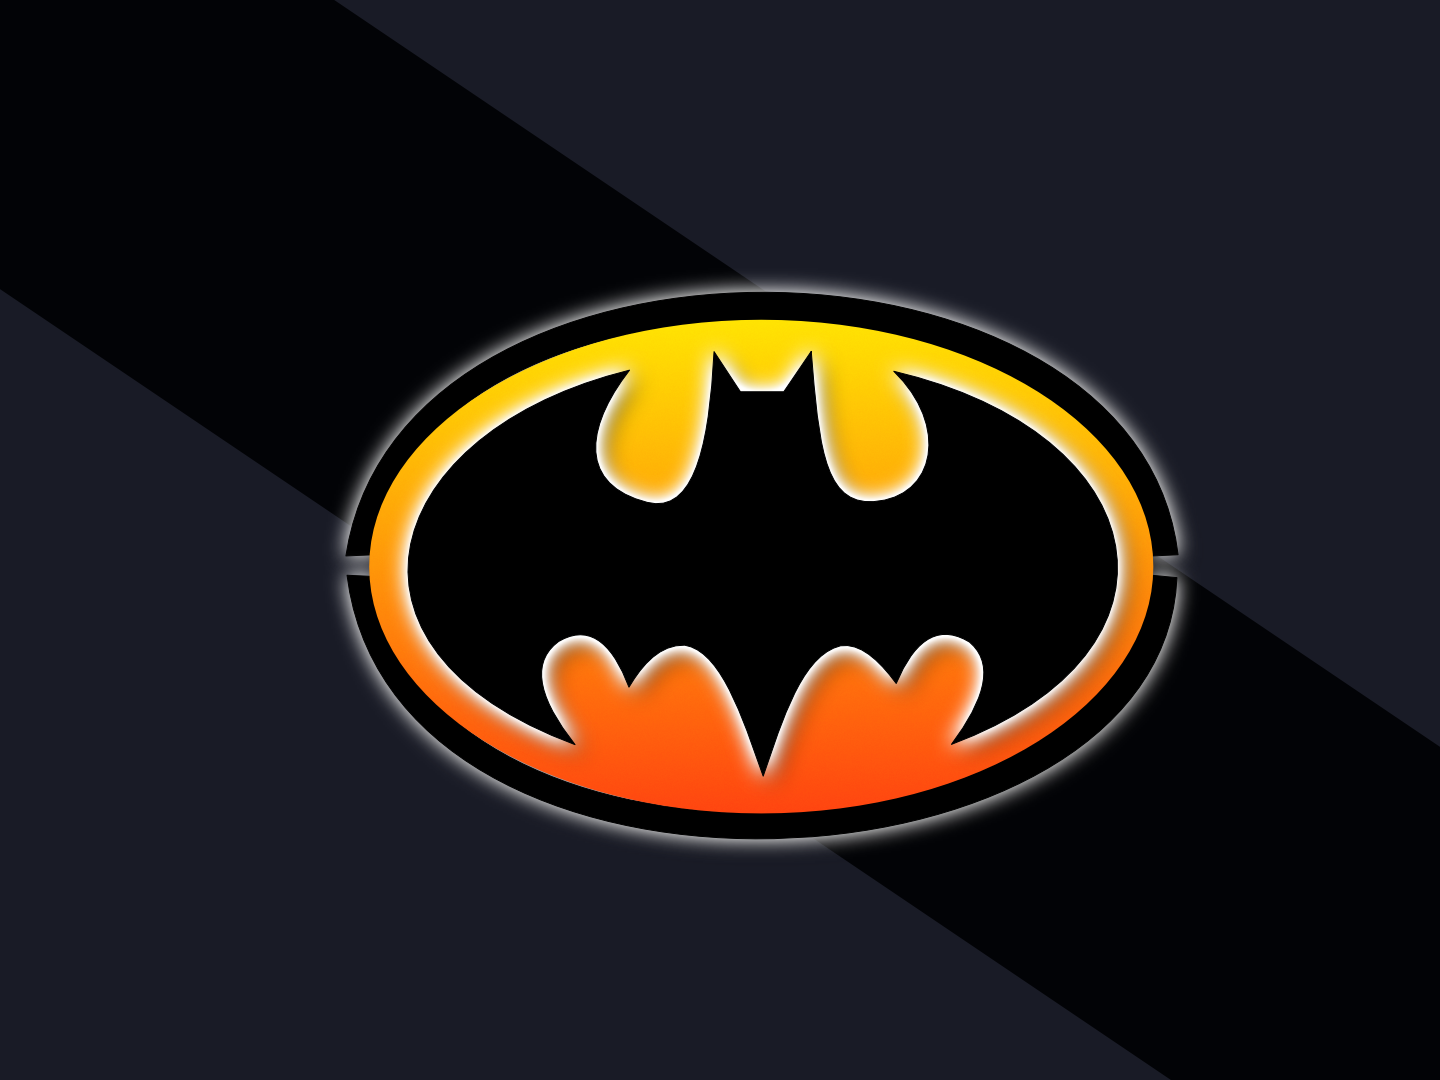 3D Batman Symbol Logo by DesignerPanda on Dribbble